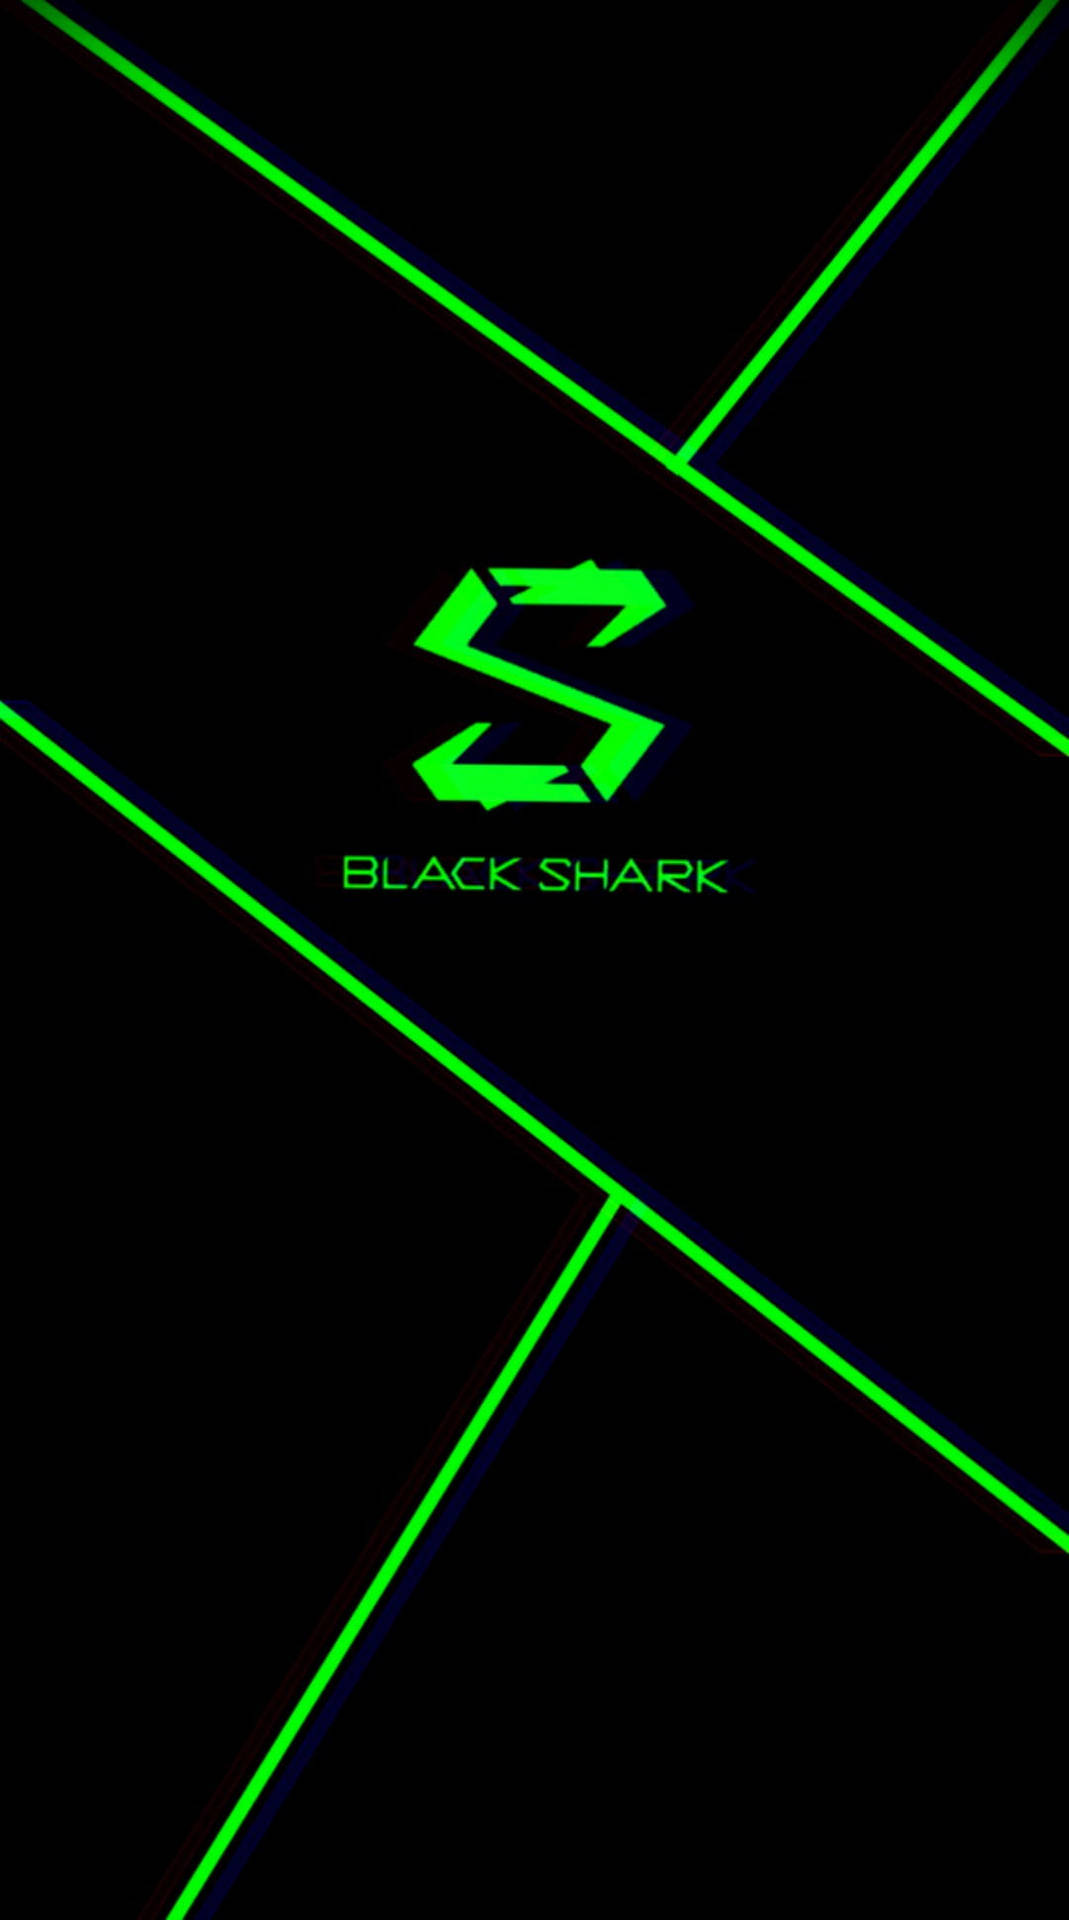 Black And Green Black Shark Wallpaper